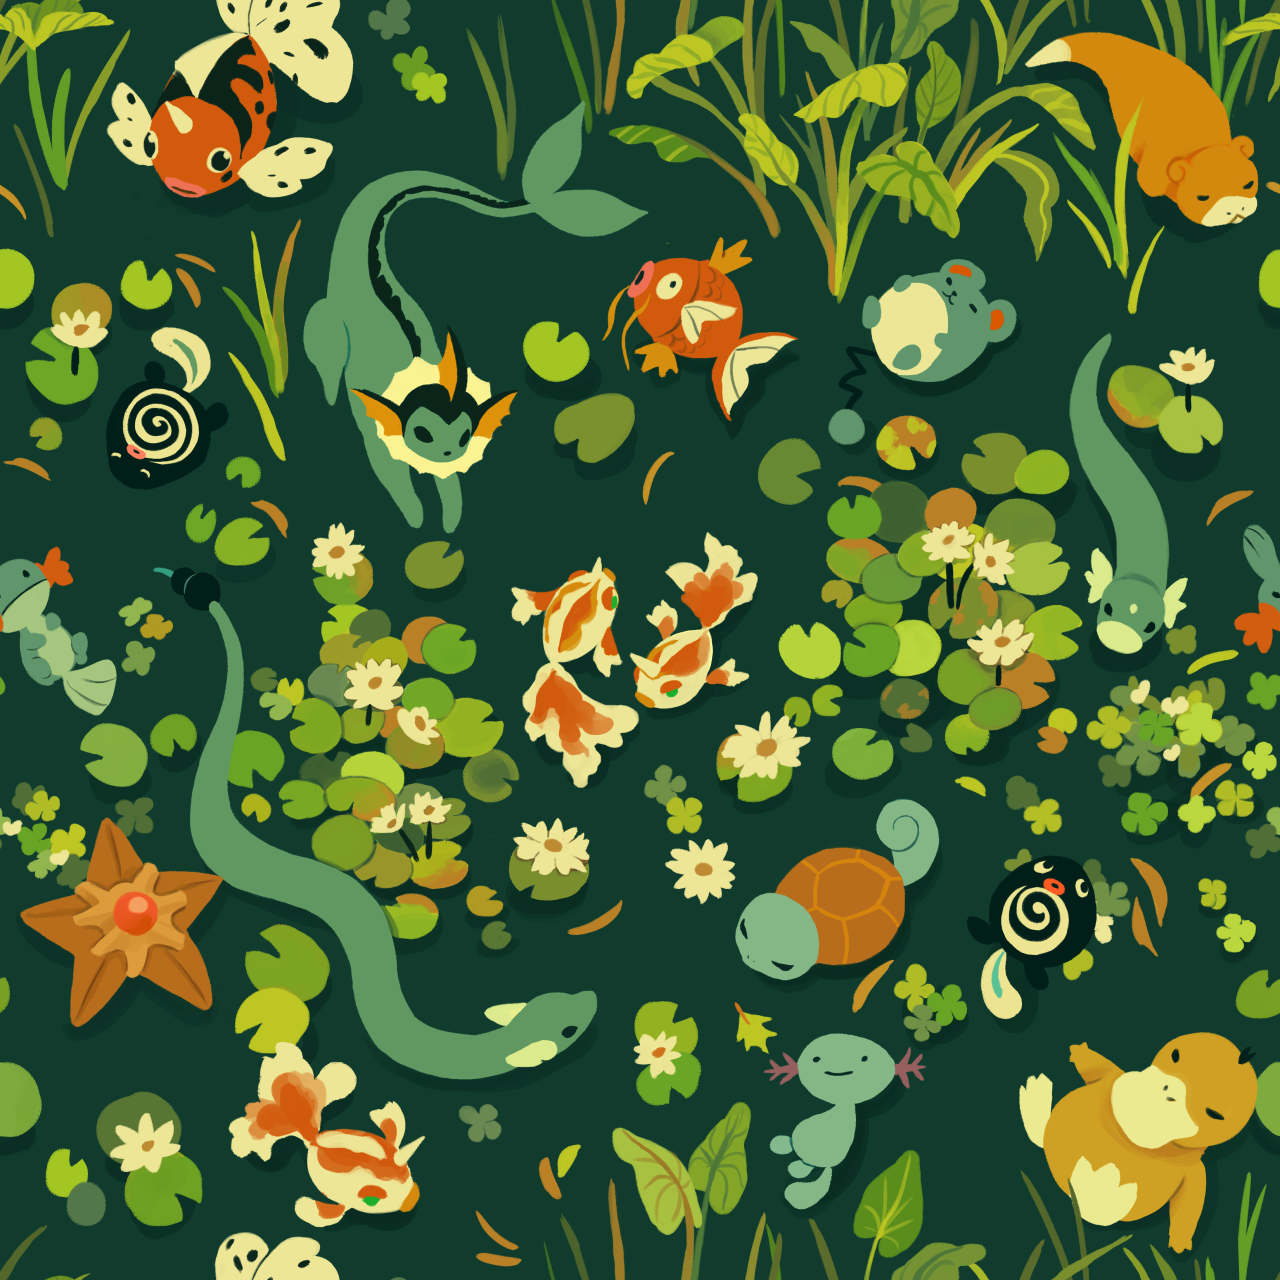 Grass Type Pokémon Wallpapers - Wallpaper Cave